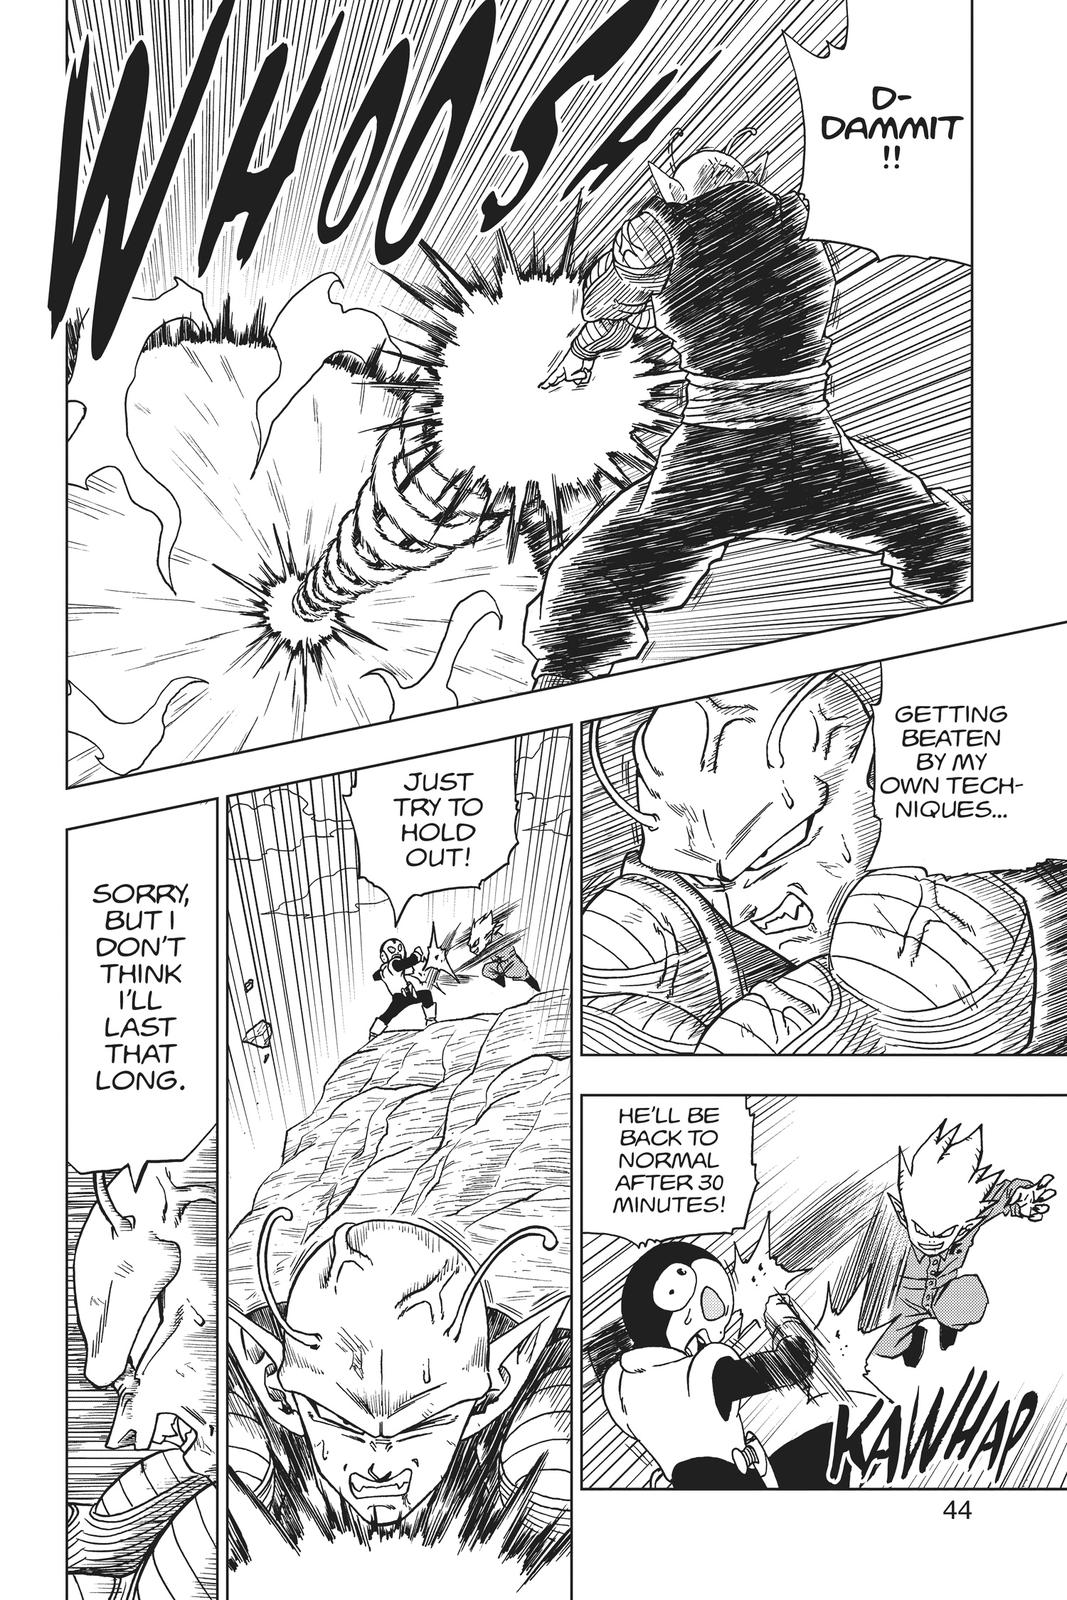  Dragon Ball Super, Chapter 53 image 45